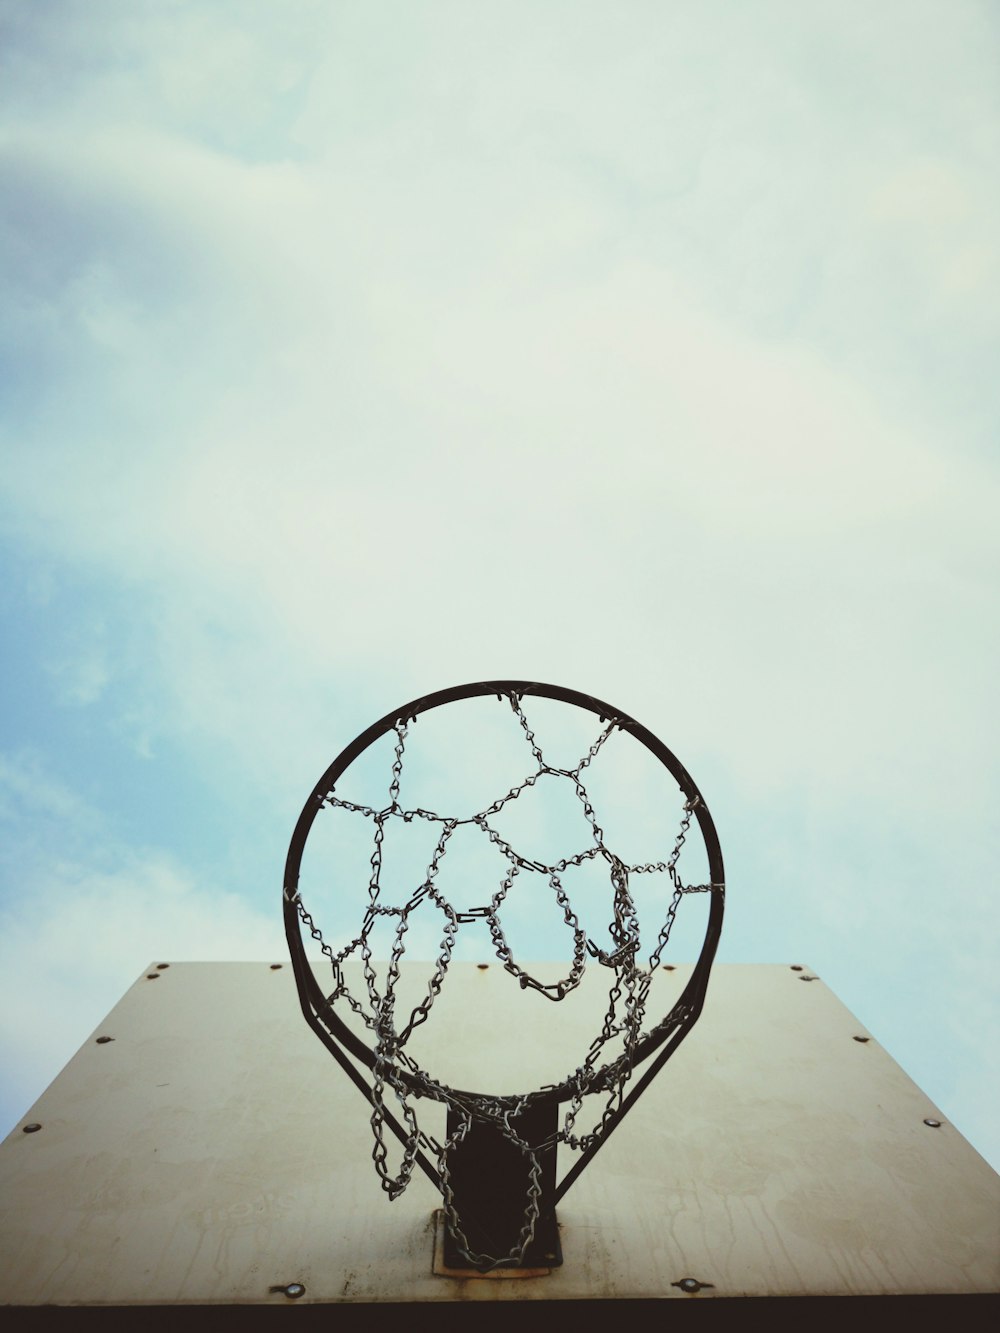 a basketball hoop on a building